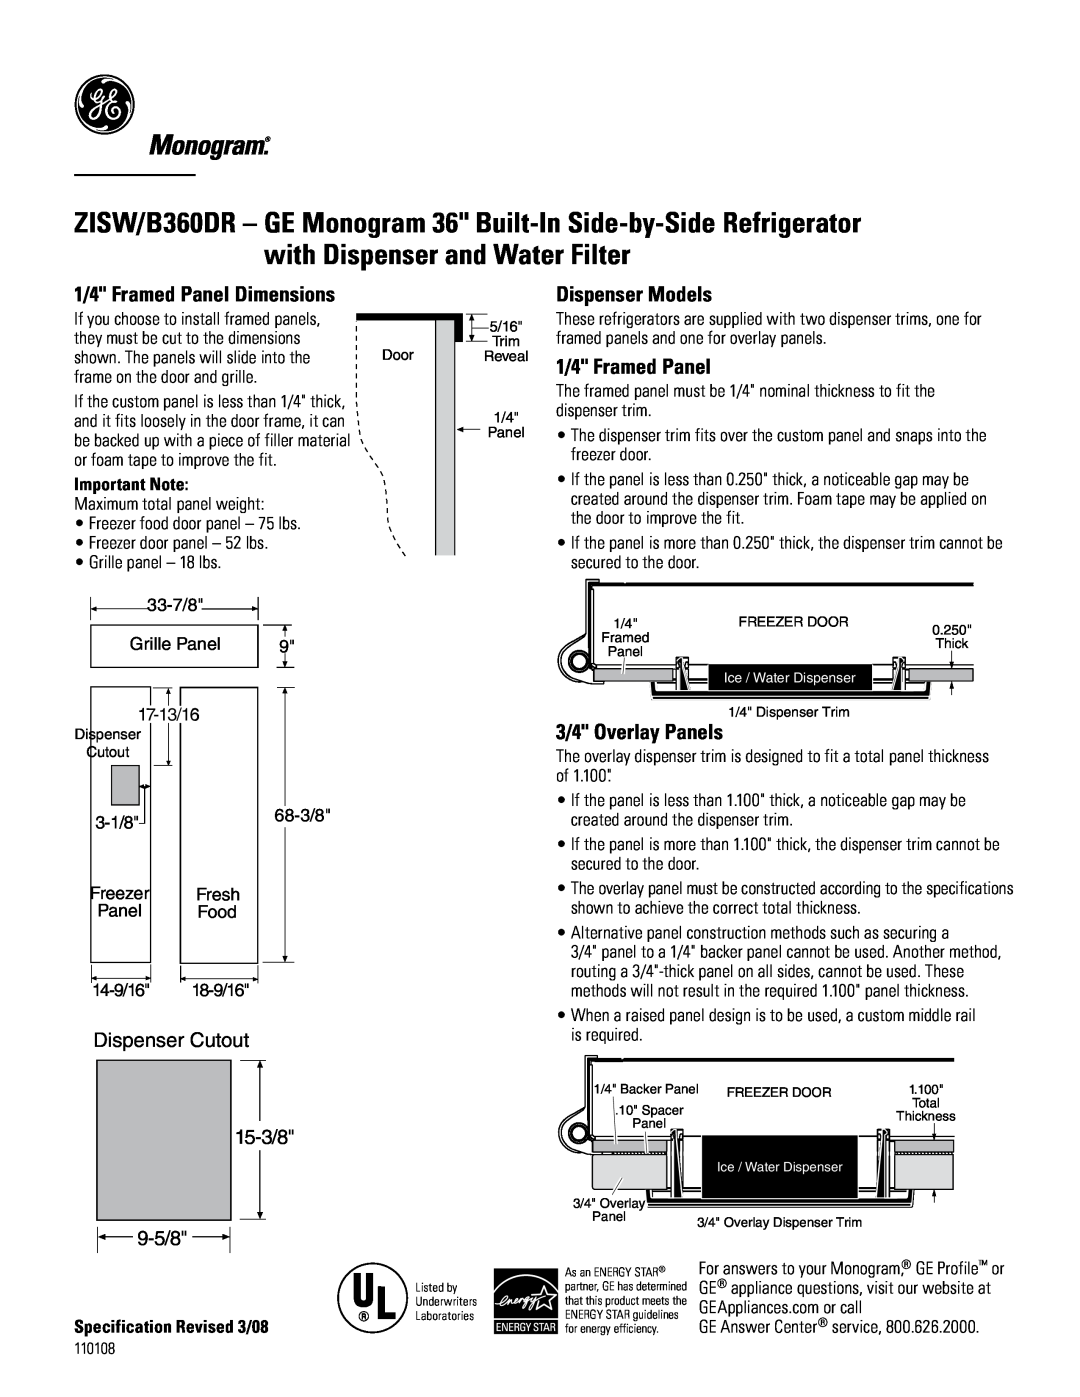 GE ZISW/B360DR 1/4 Framed Panel Dimensions, Dispenser Models, 3/4 Overlay Panels, Dispenser Cutout, 15-3/8, 9-5/8 